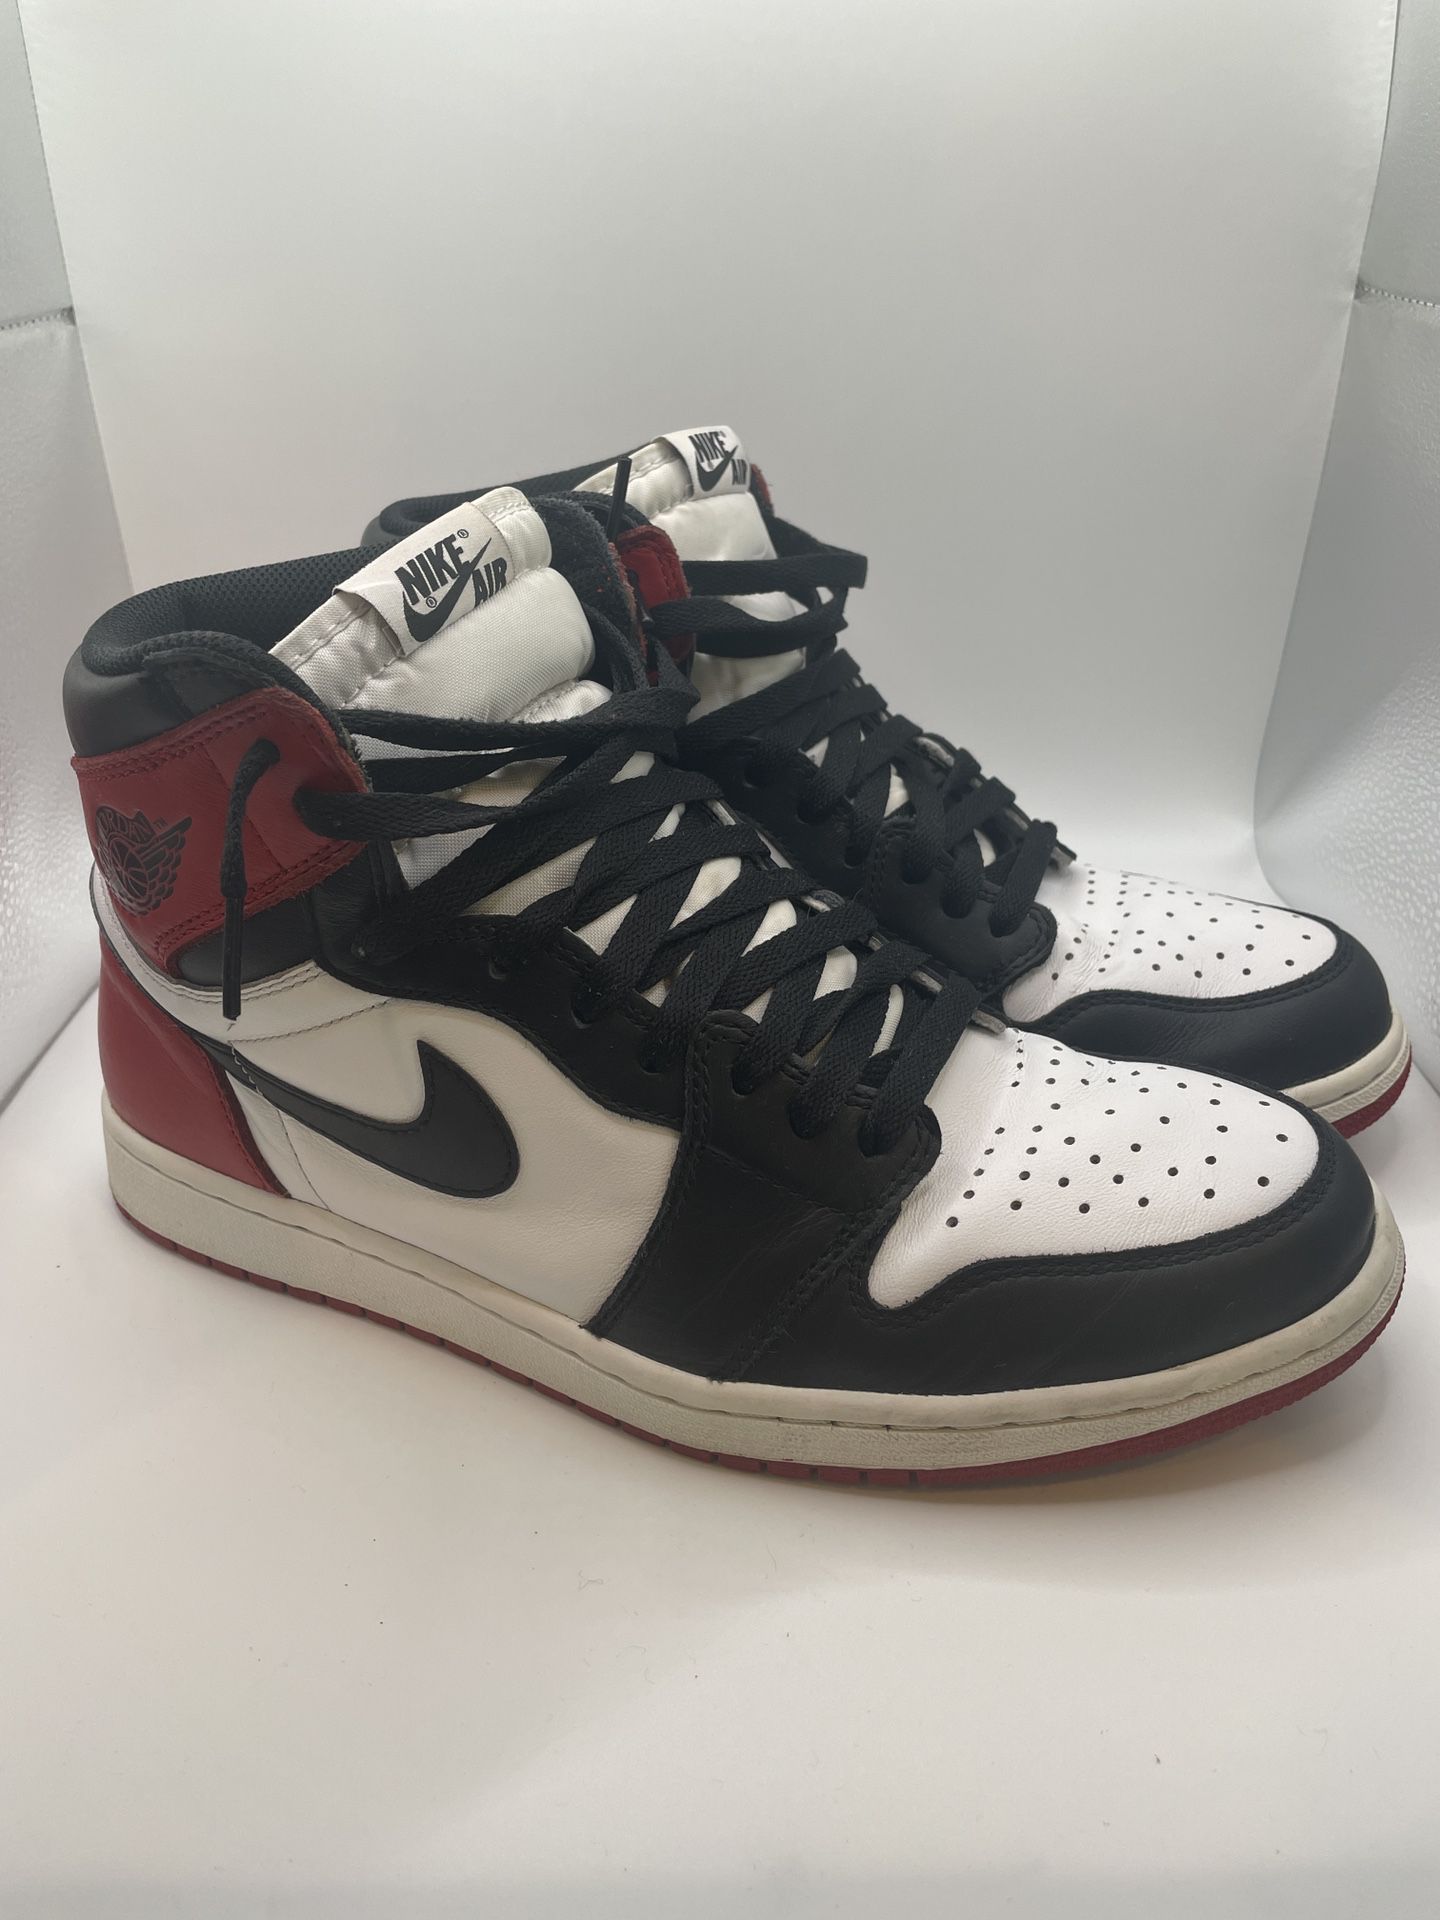 Air Jordan 1 Retro High OG ‘Black Toe’ - Size 11